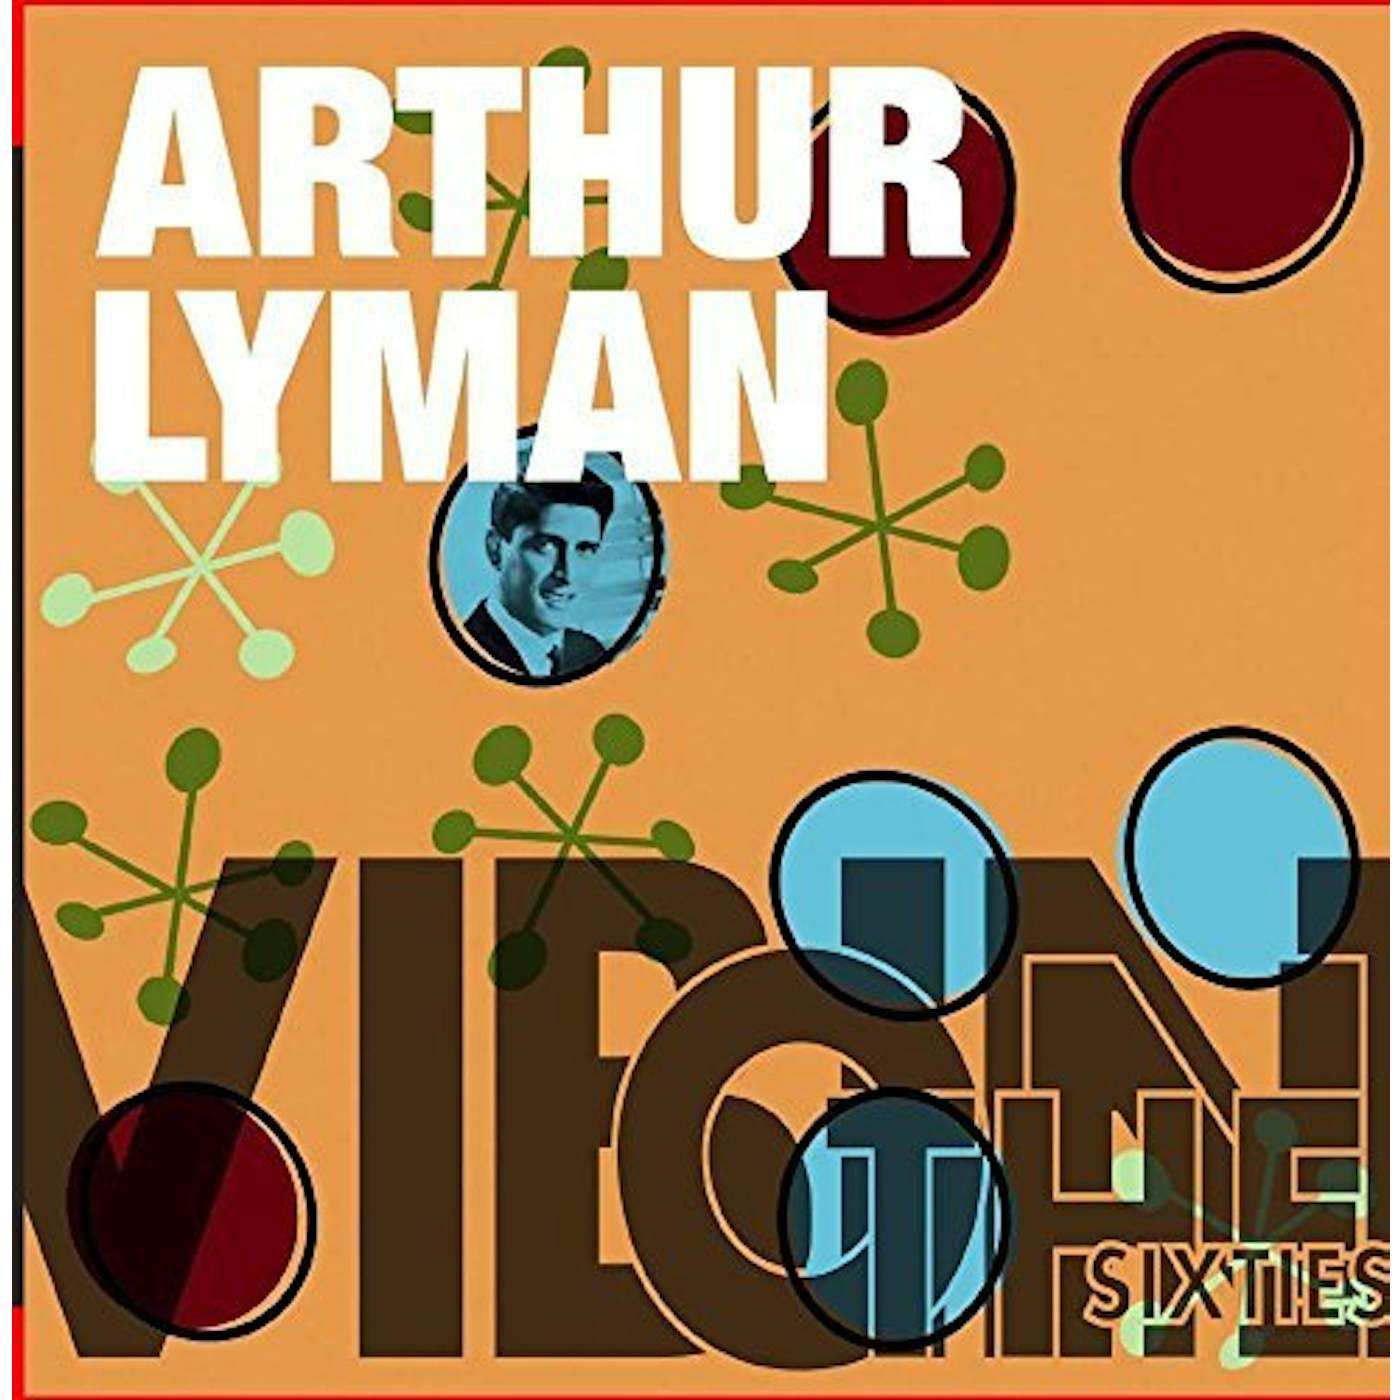 Arthur Lyman VIBIN' ON THE SIXTIES CD